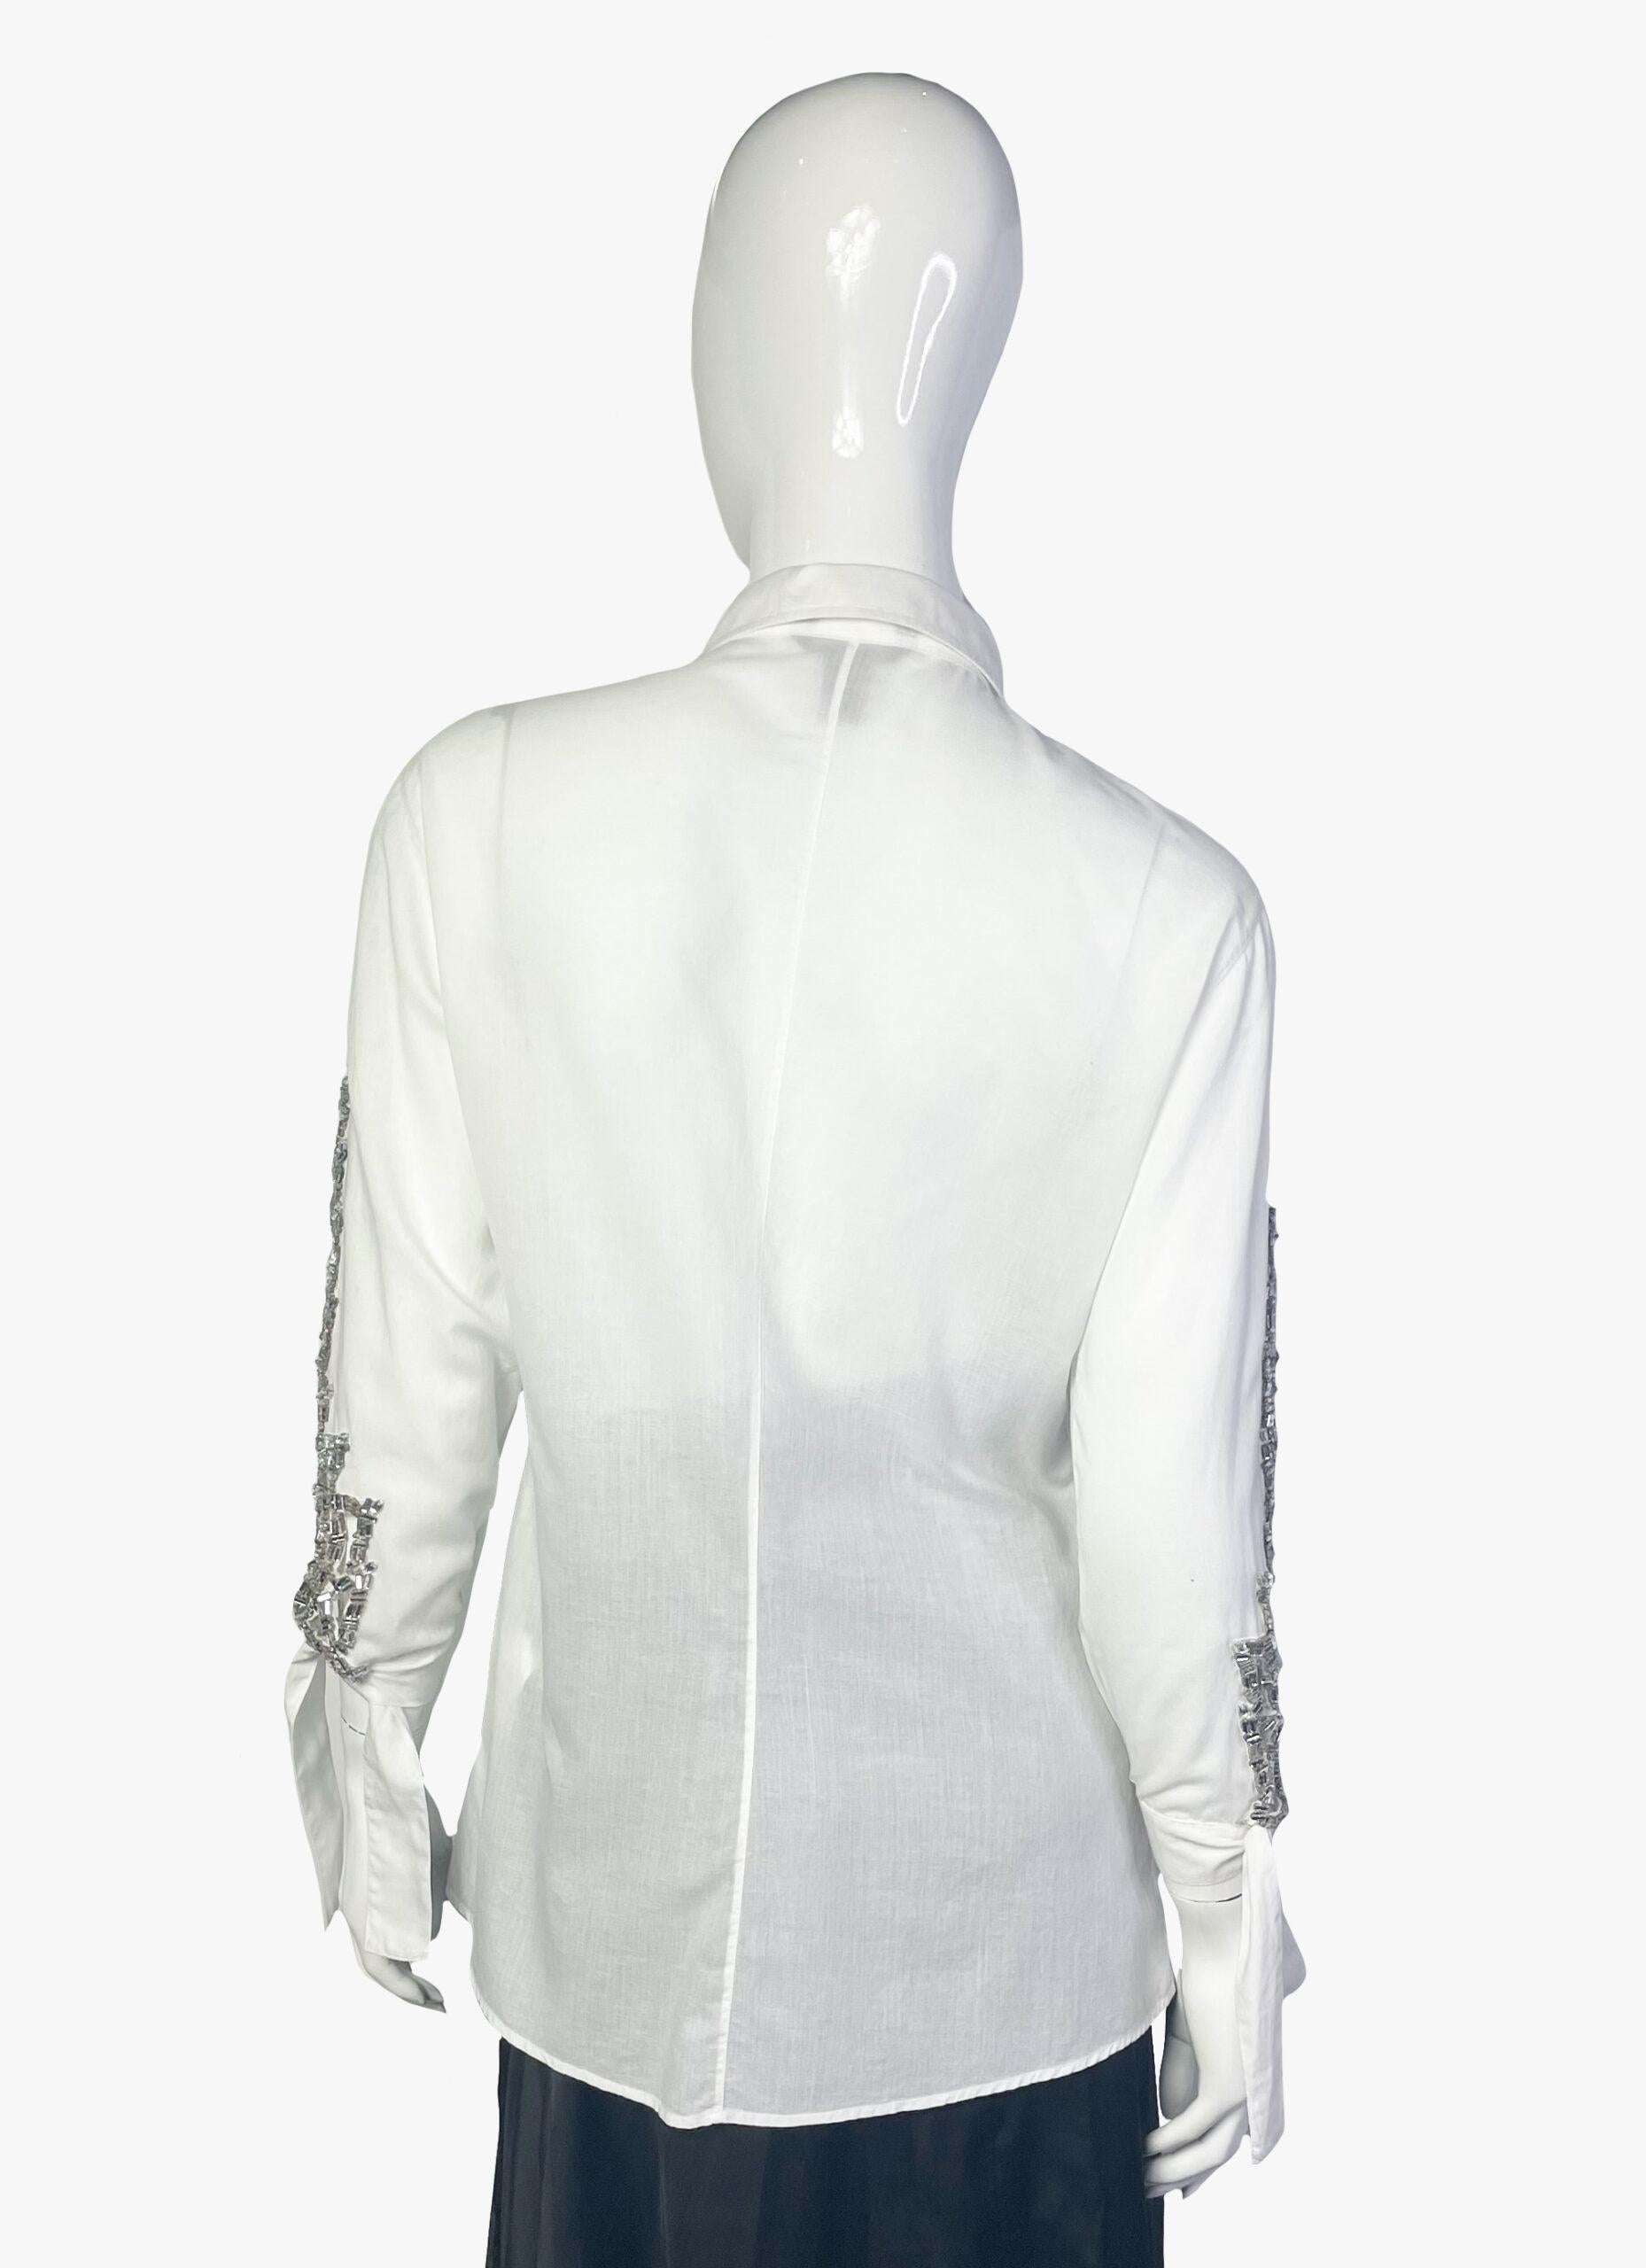 Roberto Cavalli shirt with rhinestone appliqué, 2004 For Sale 2